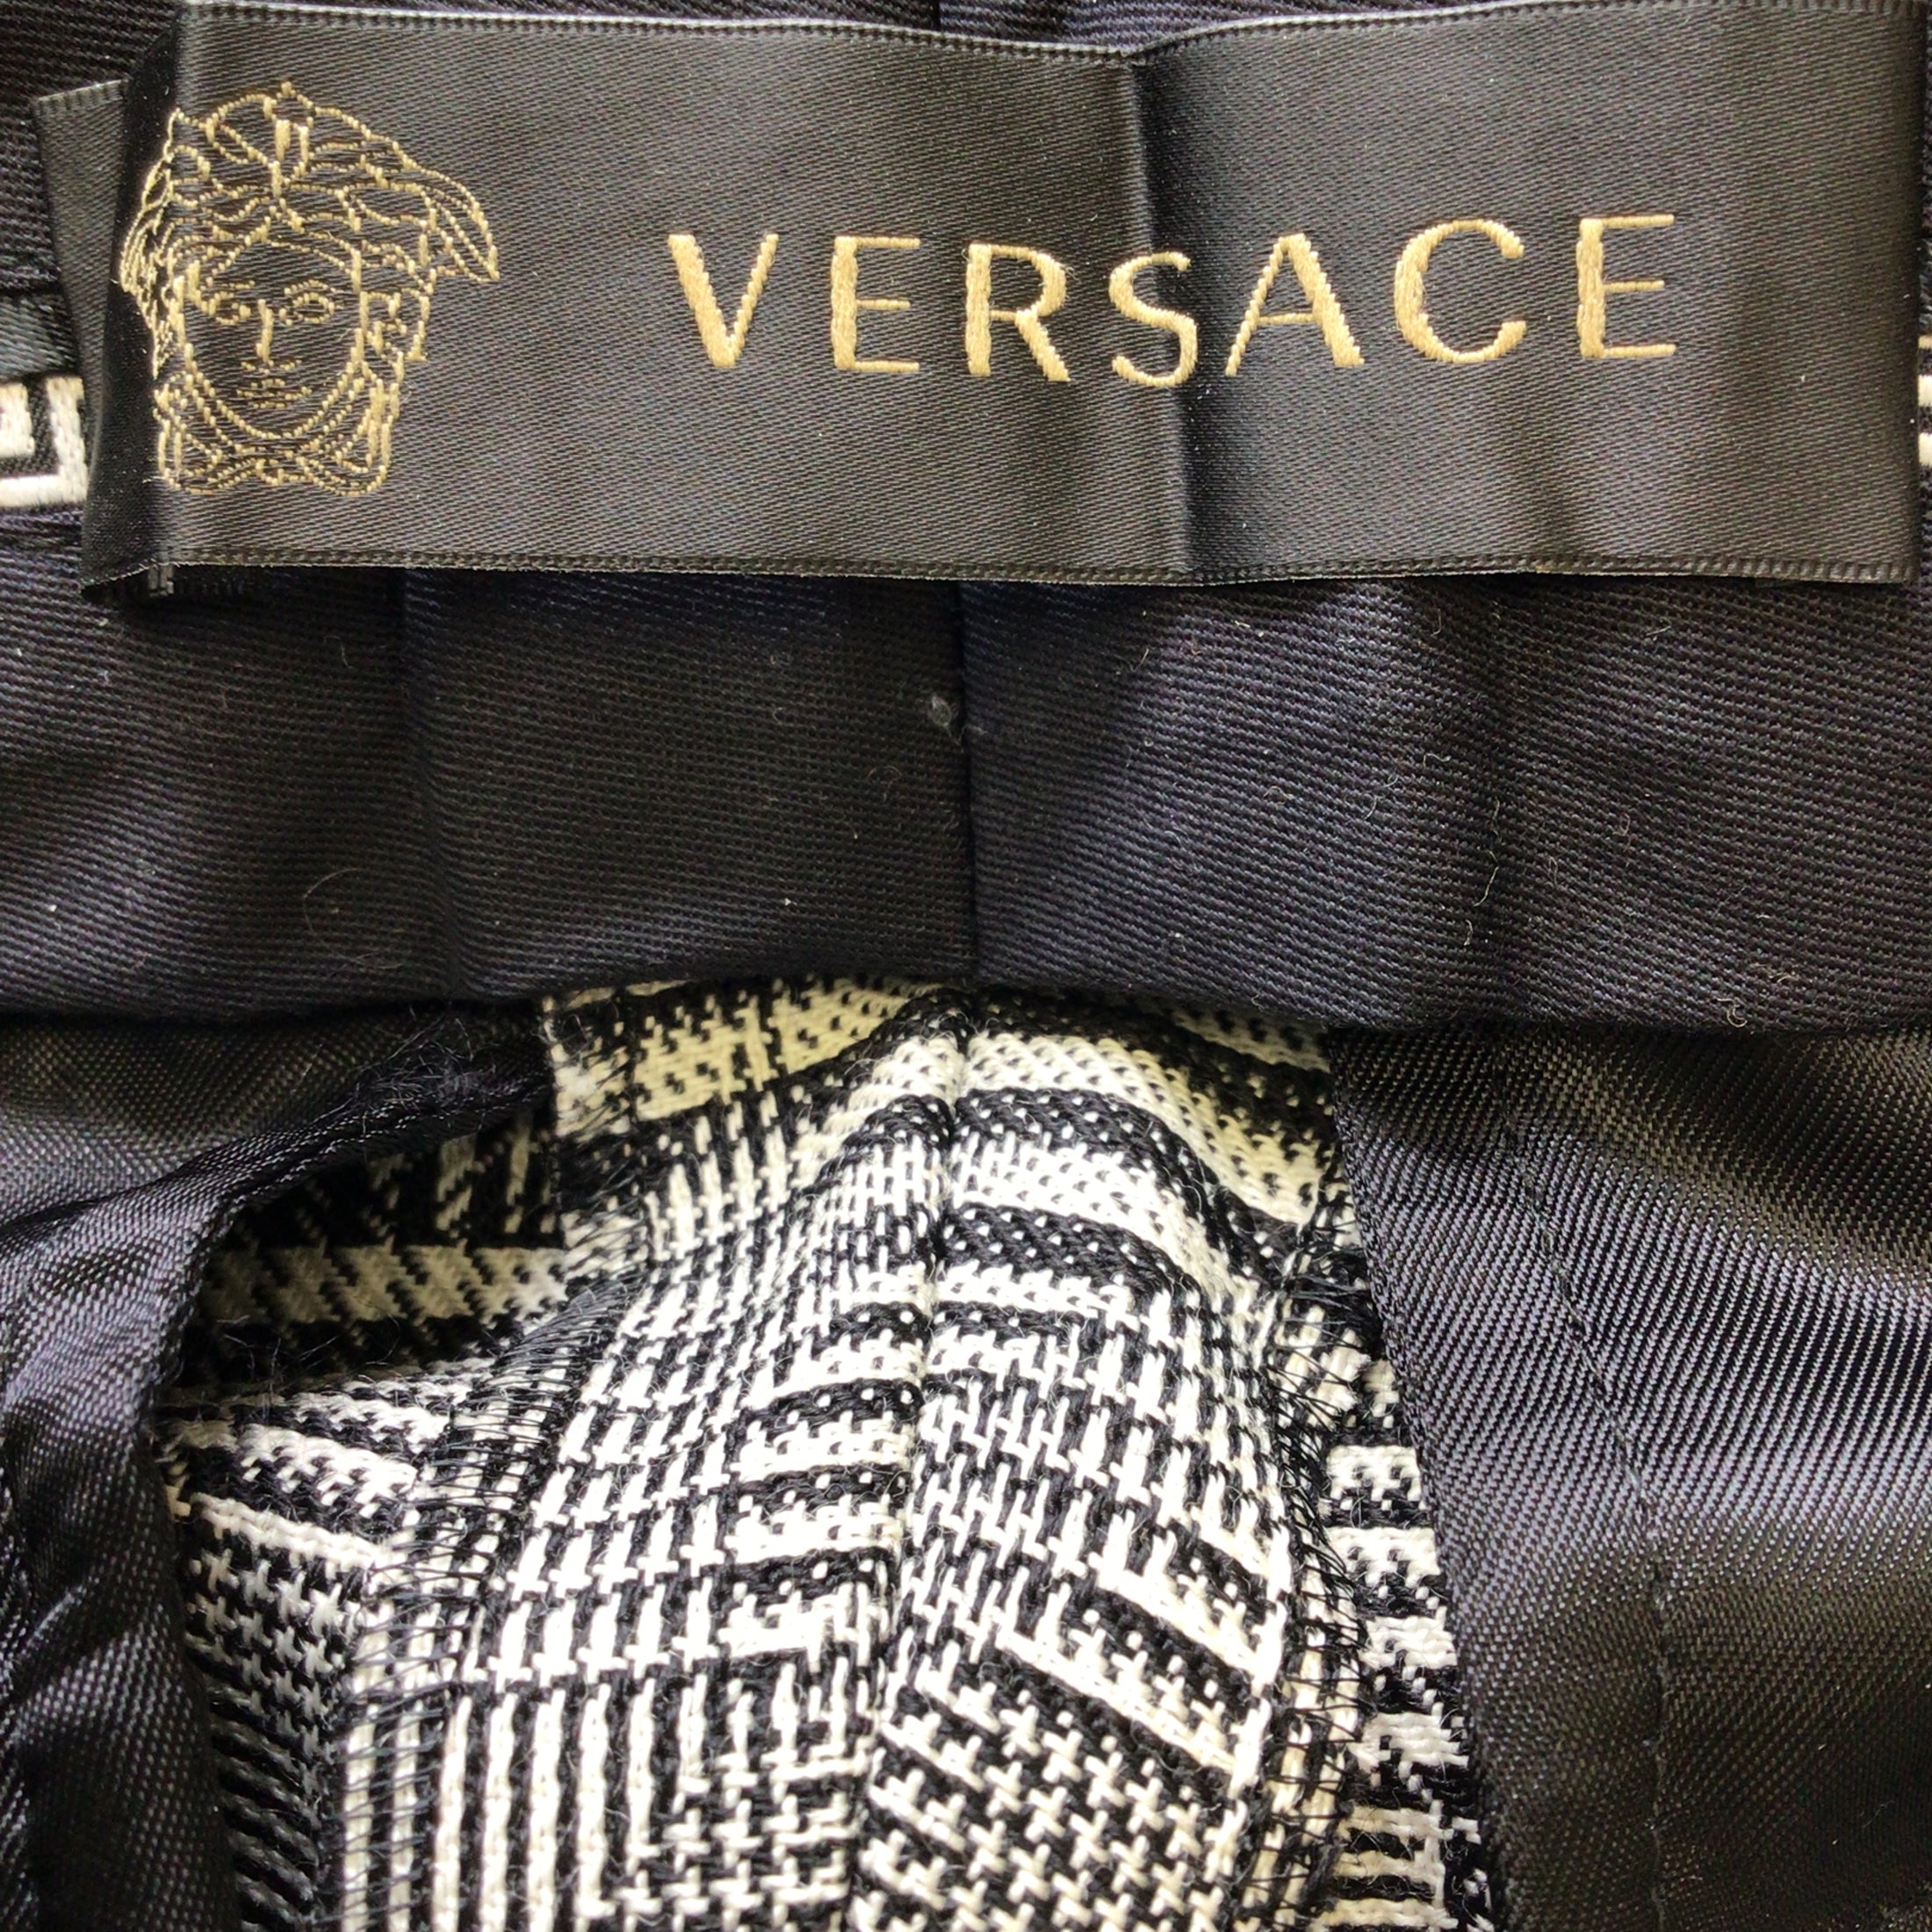 Versace Black / White Check Wool Trousers / Pants